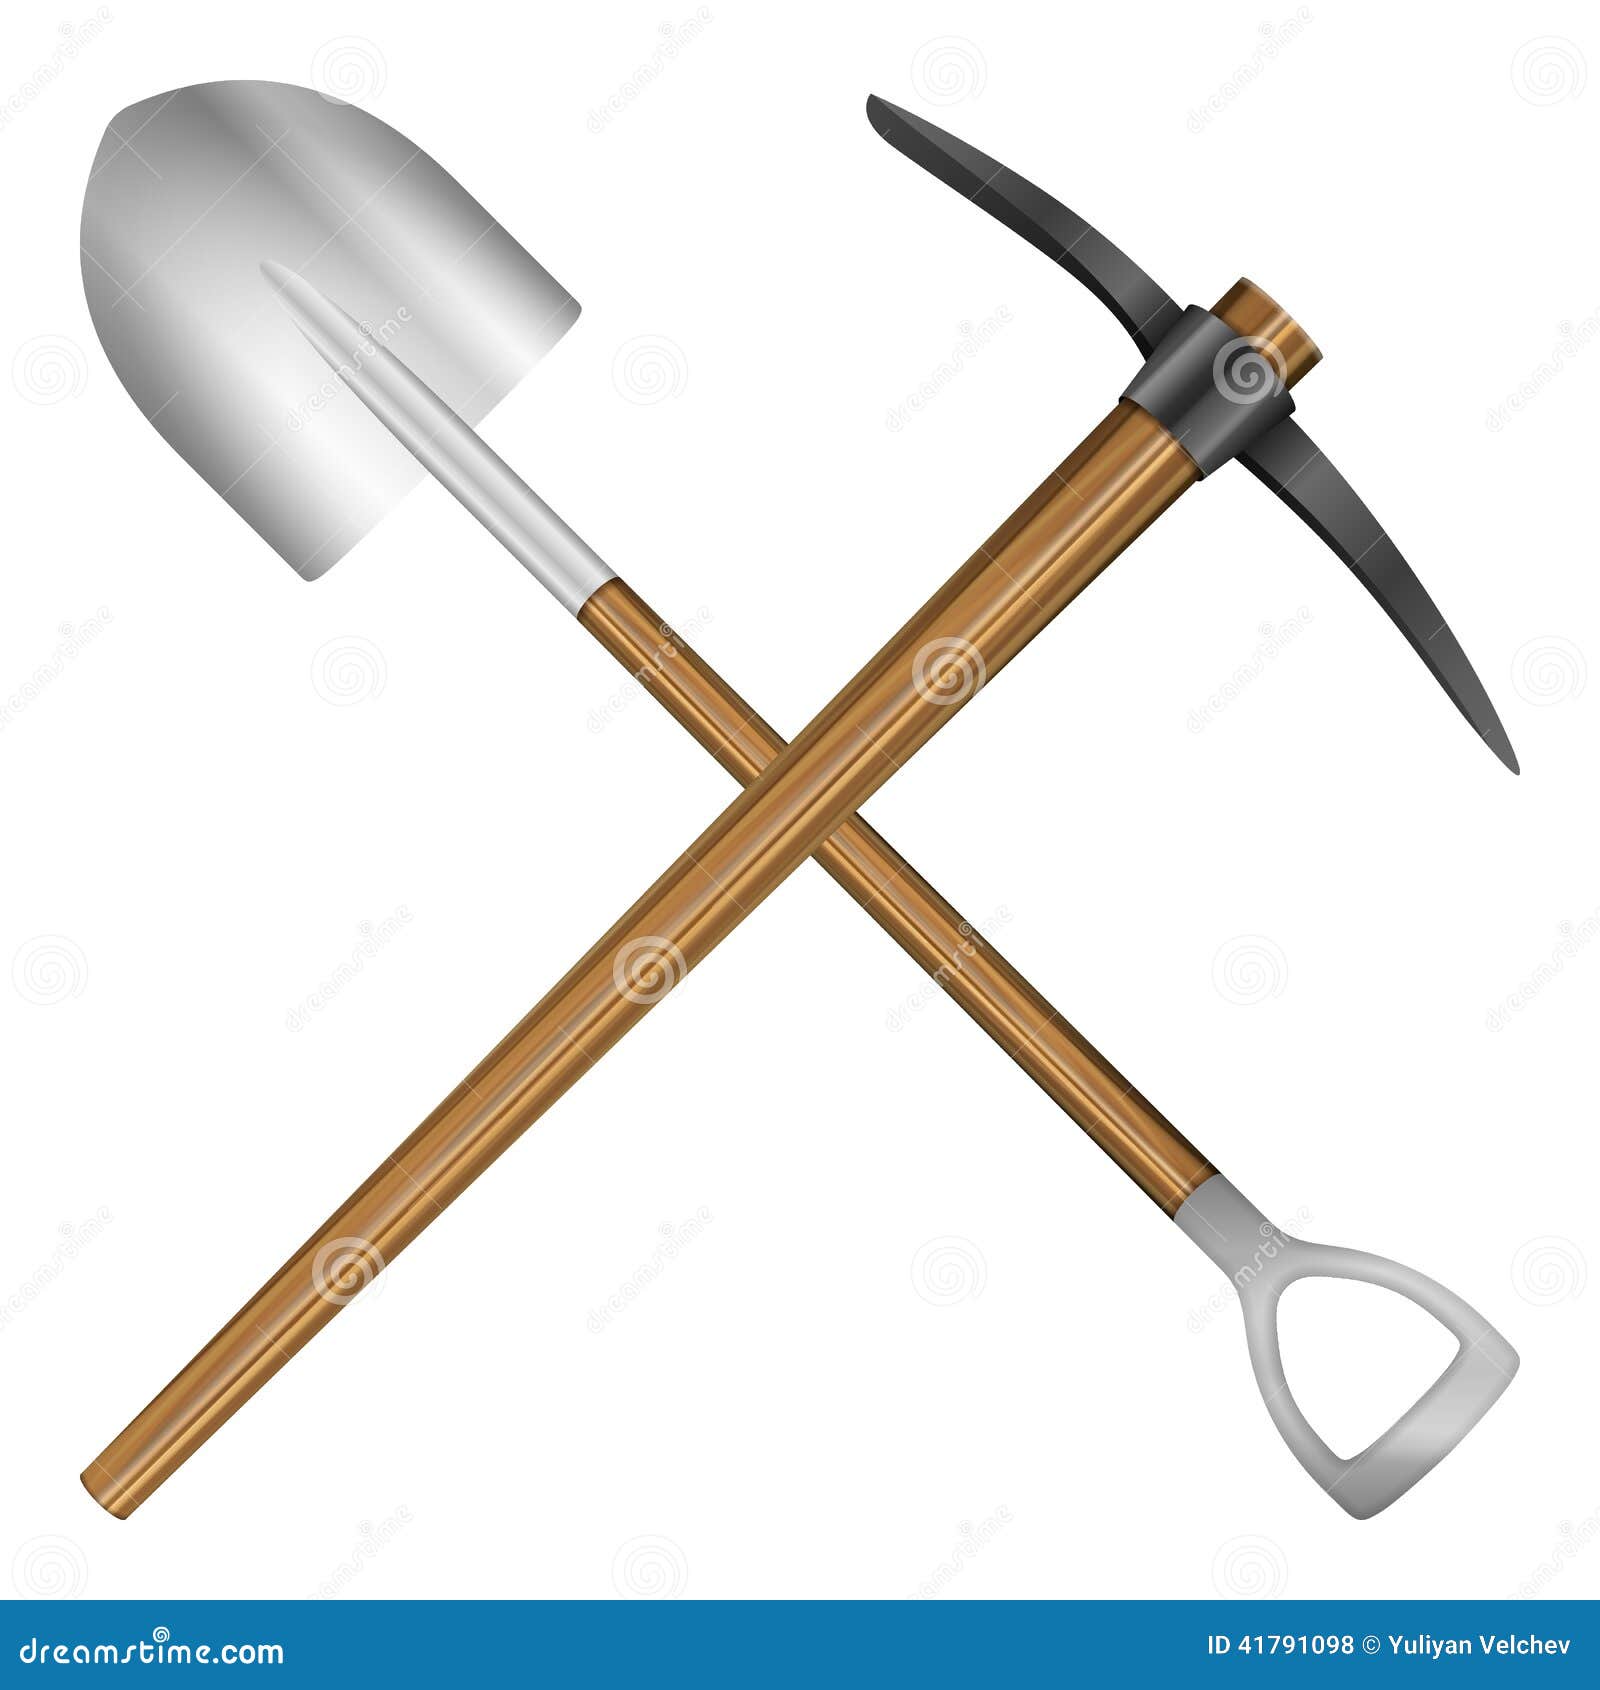 shovel and mattock